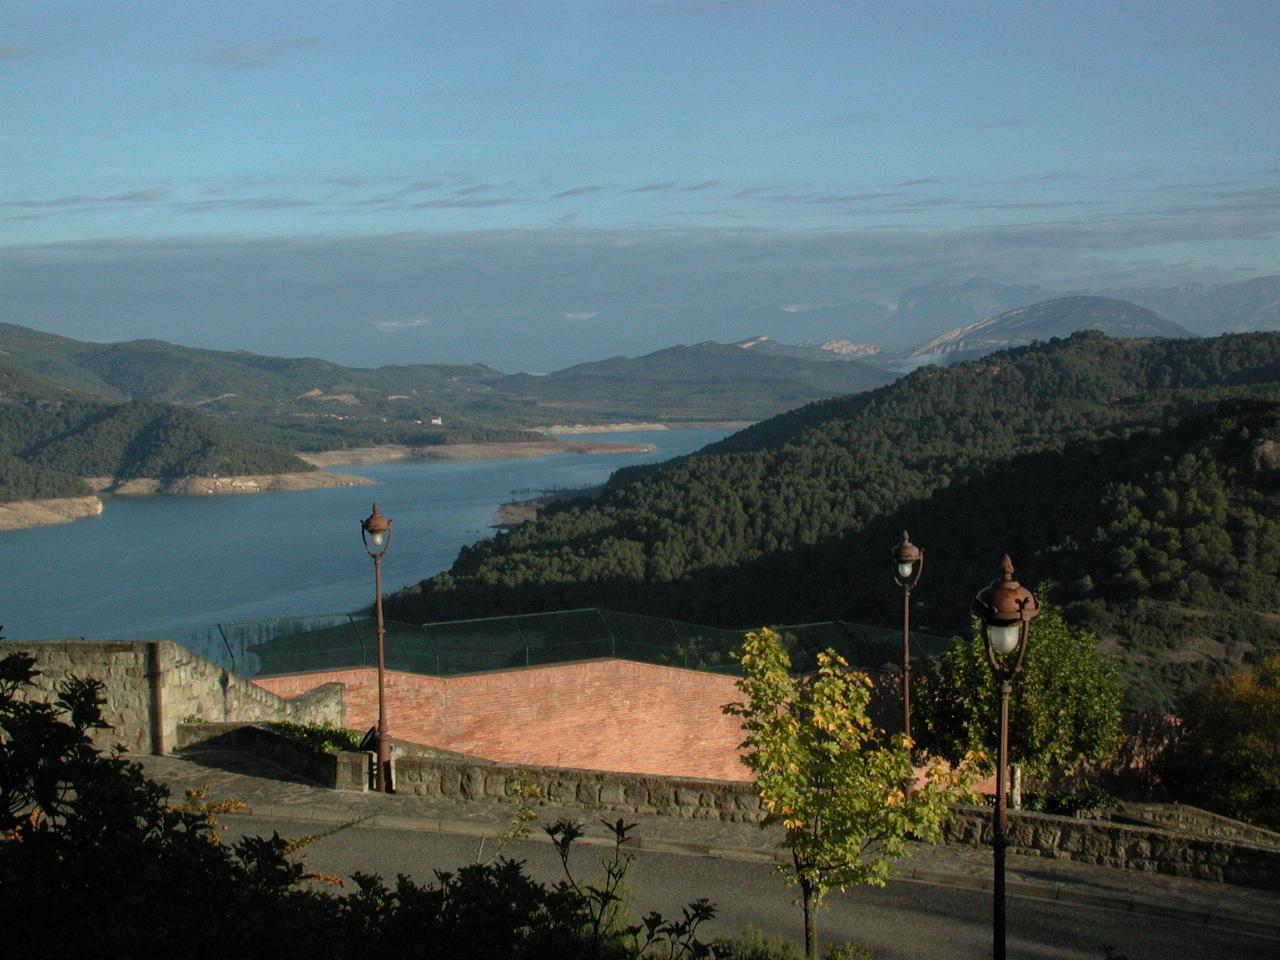 Pyrenees and reservoir at Torreciudad Shrine